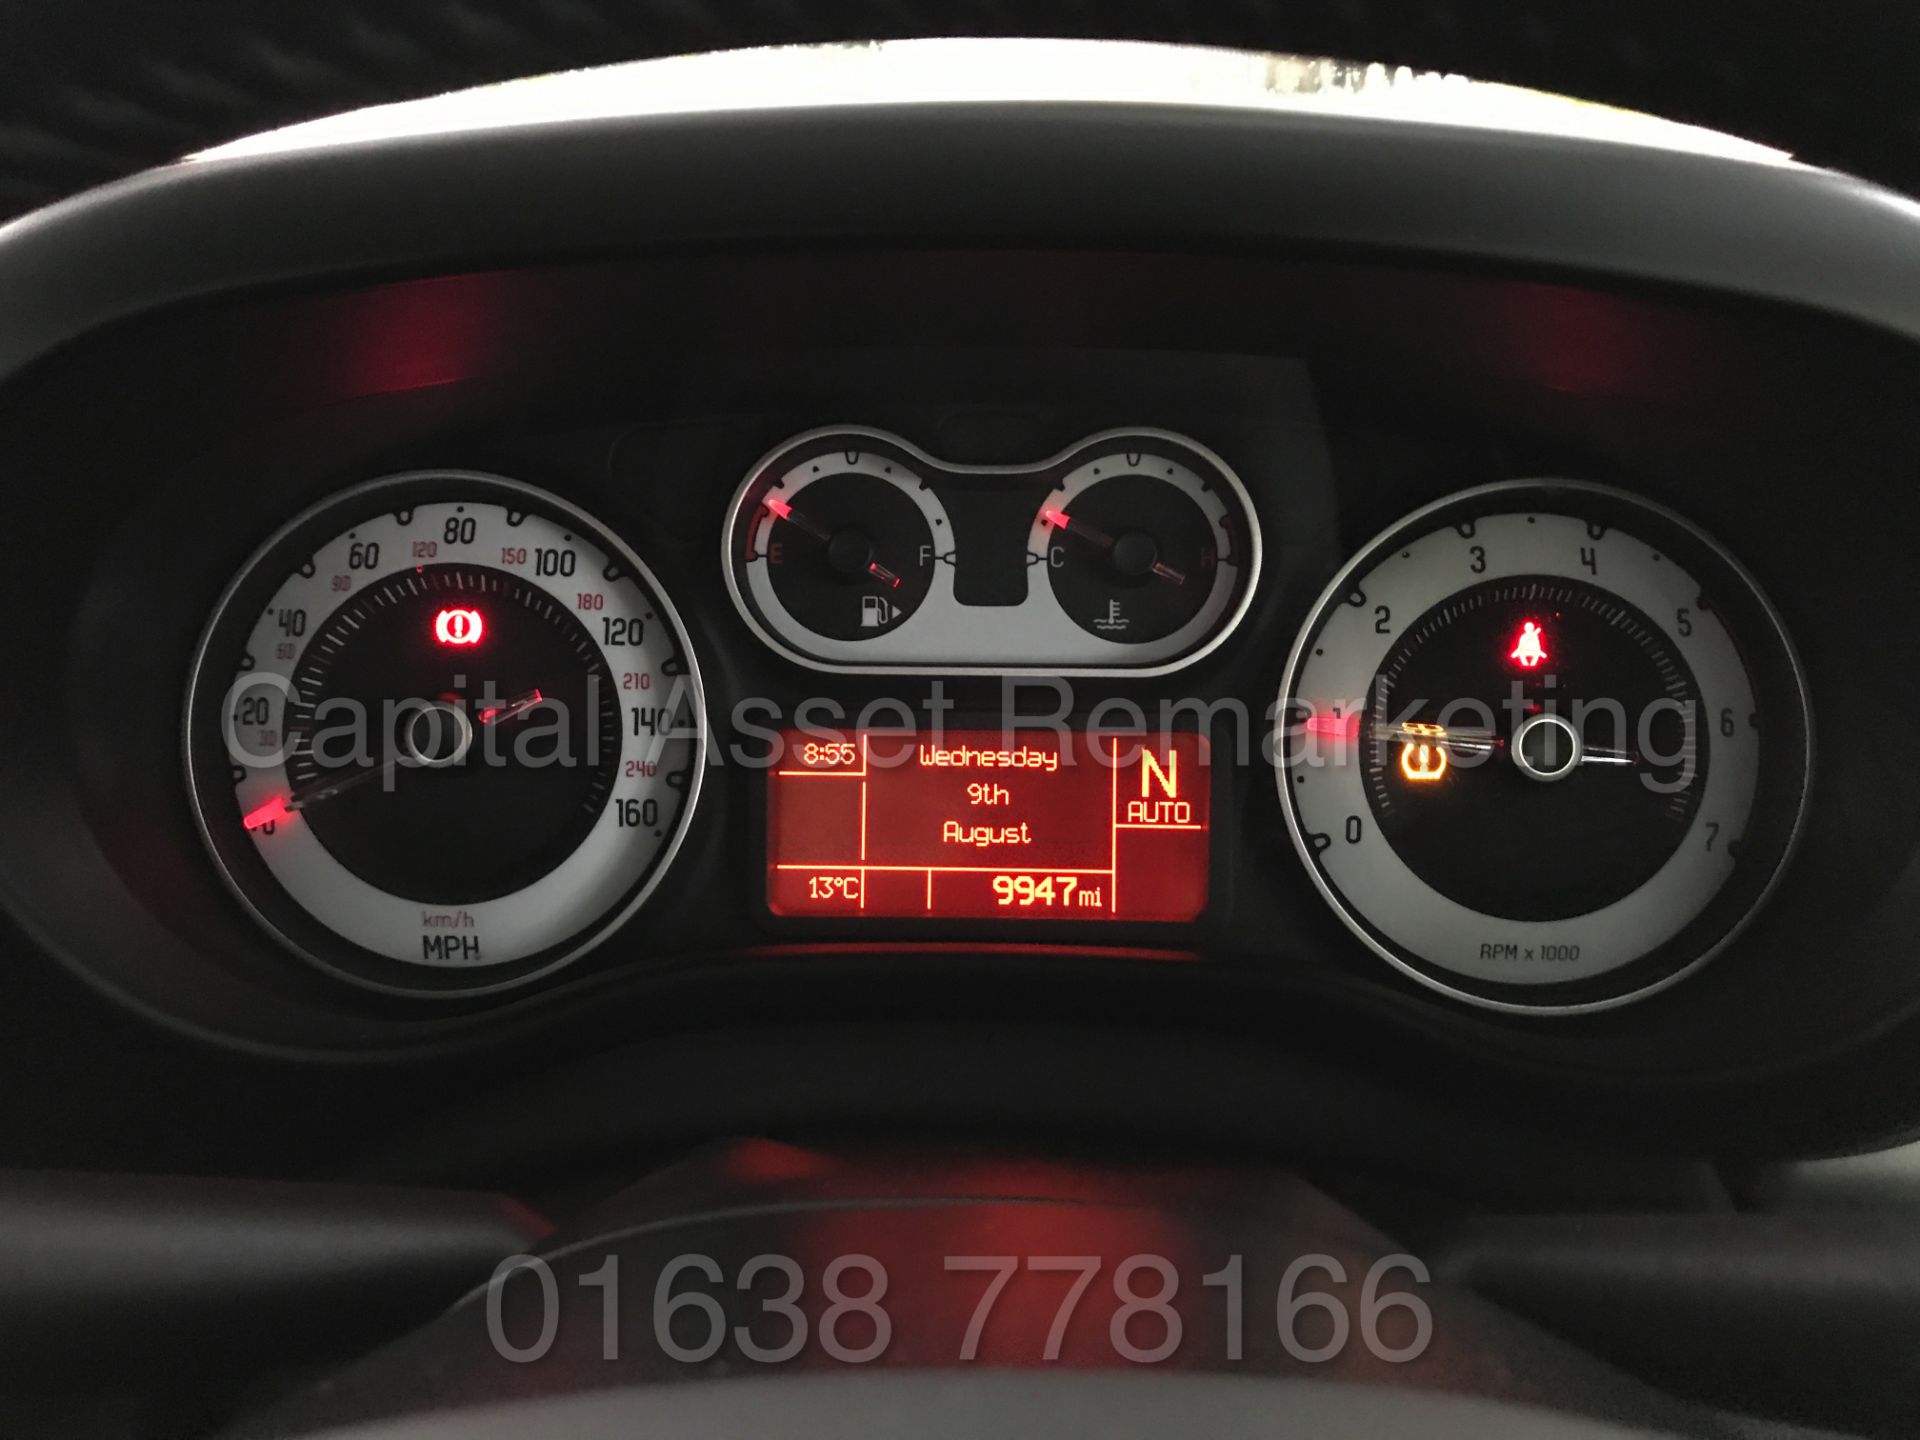 FIAT 500L 'POP STAR' (2015 - FACELIFT MODEL) '1.3 MULTIJET DIESEL - SEMI AUTO - AIR CON' *LOW MILES* - Image 27 of 27